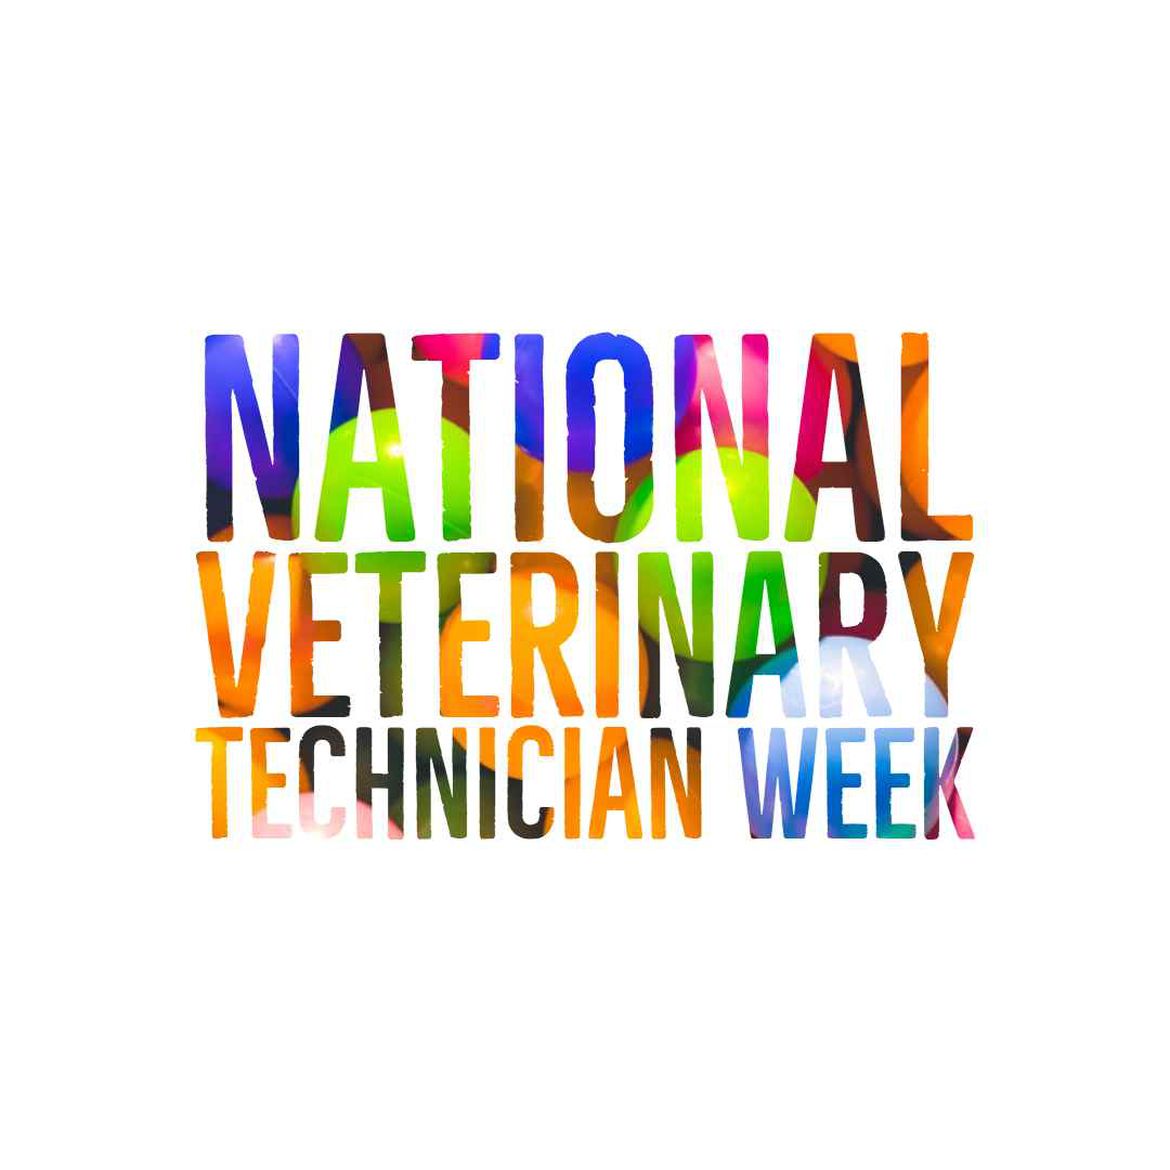 Social media post promotion National Veterinary Technician Week 2019